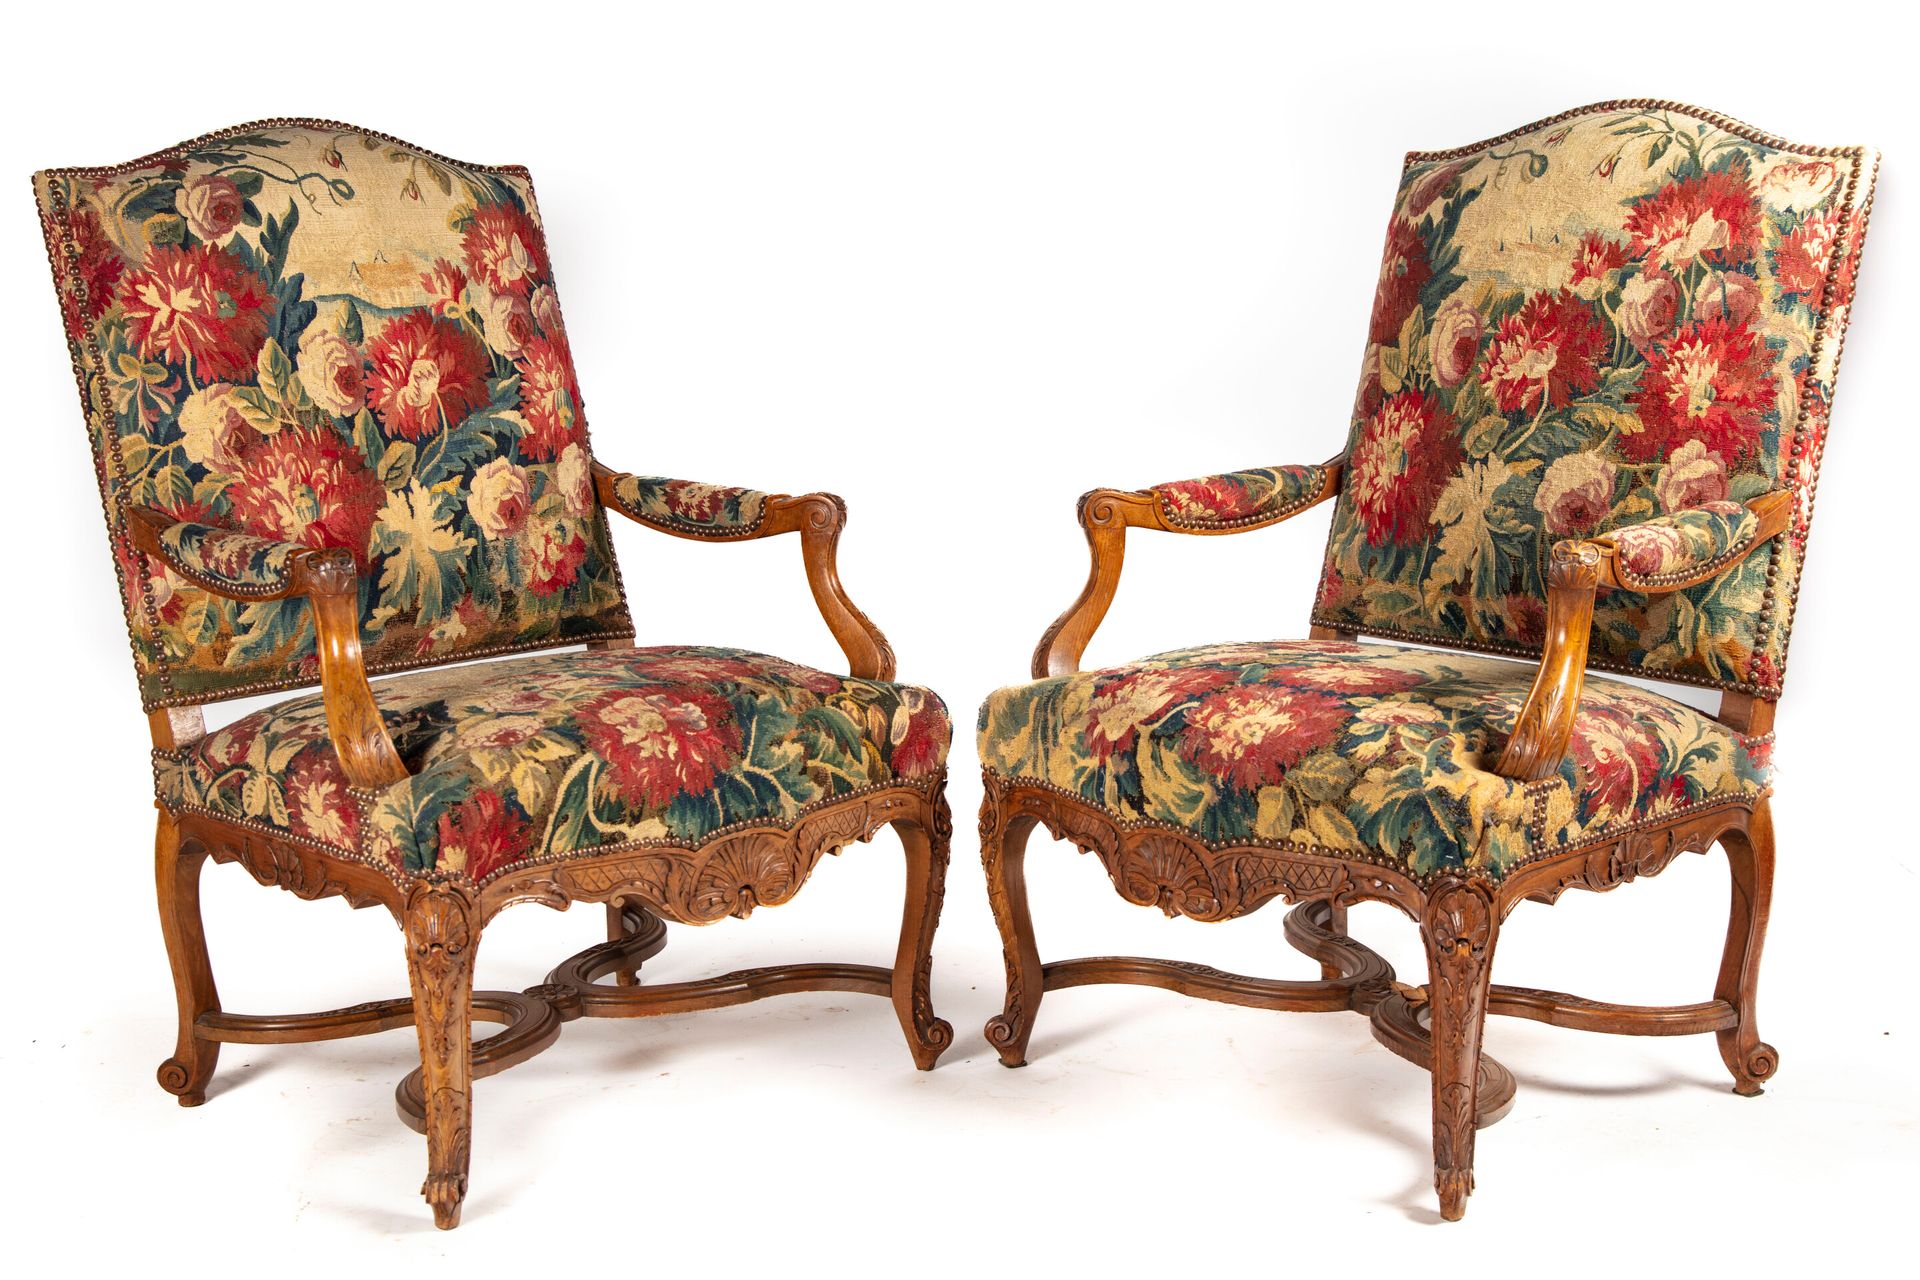 Null 一对扶手椅，天然的木质结构，模压和丰富的雕刻着叶子和贝壳。弯曲的腿由一个 "X "形支架连接。 摄政风格

它们上面覆盖着18世纪的美丽挂毯，上面还有&hellip;